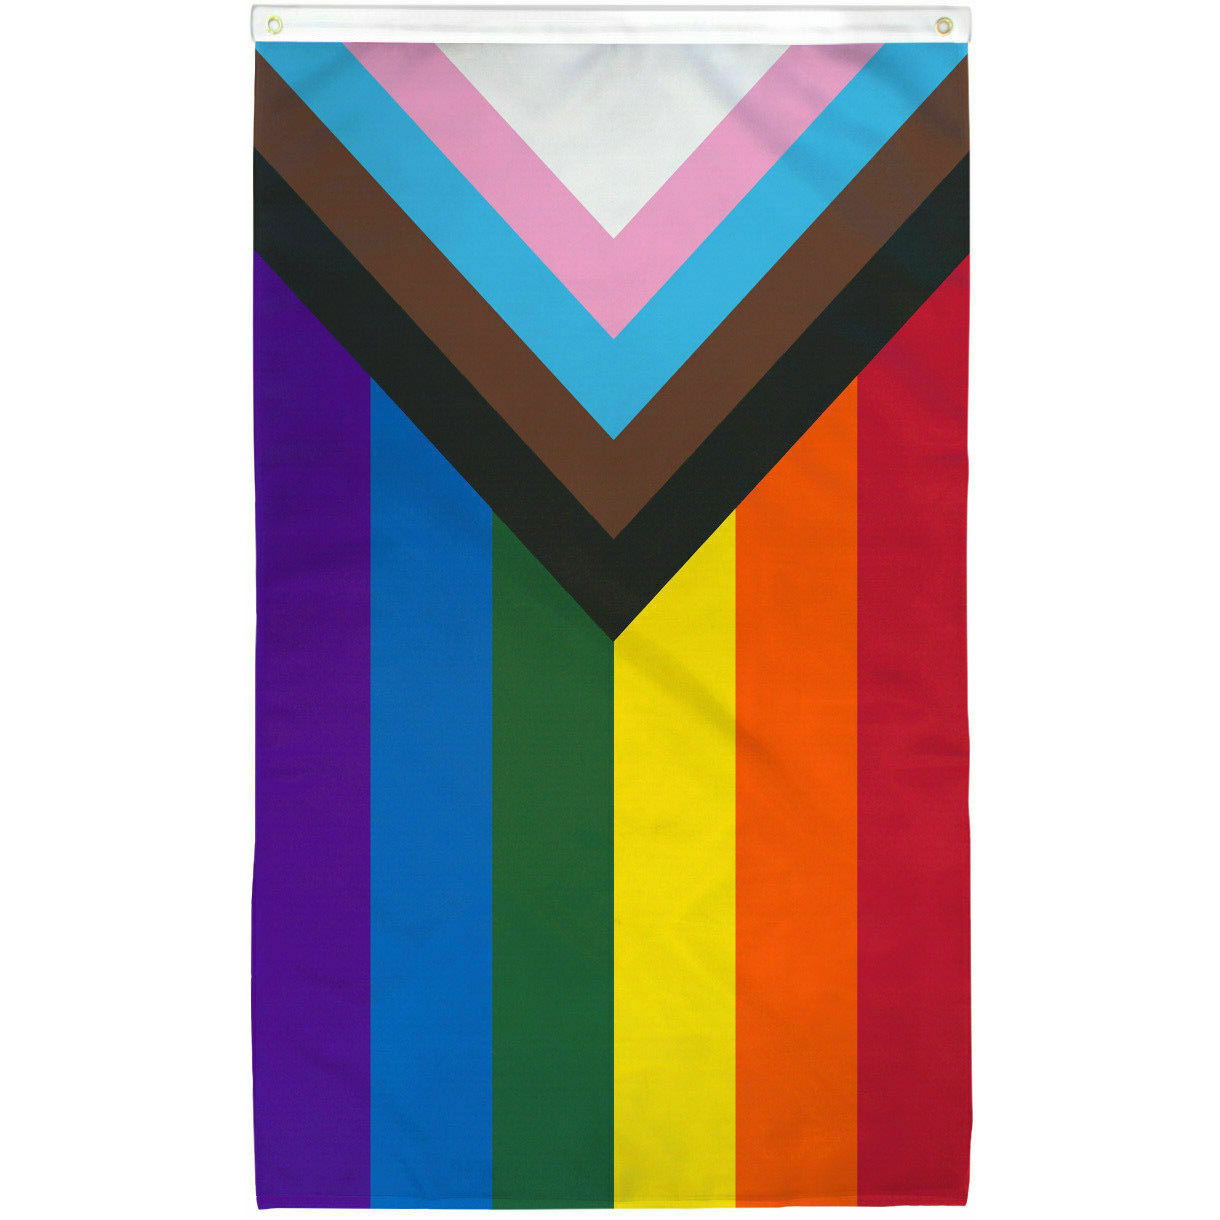 Details about   "PROGRESS RAINBOW PRIDE" flag 3x5 ft nylon banner LGBTQ